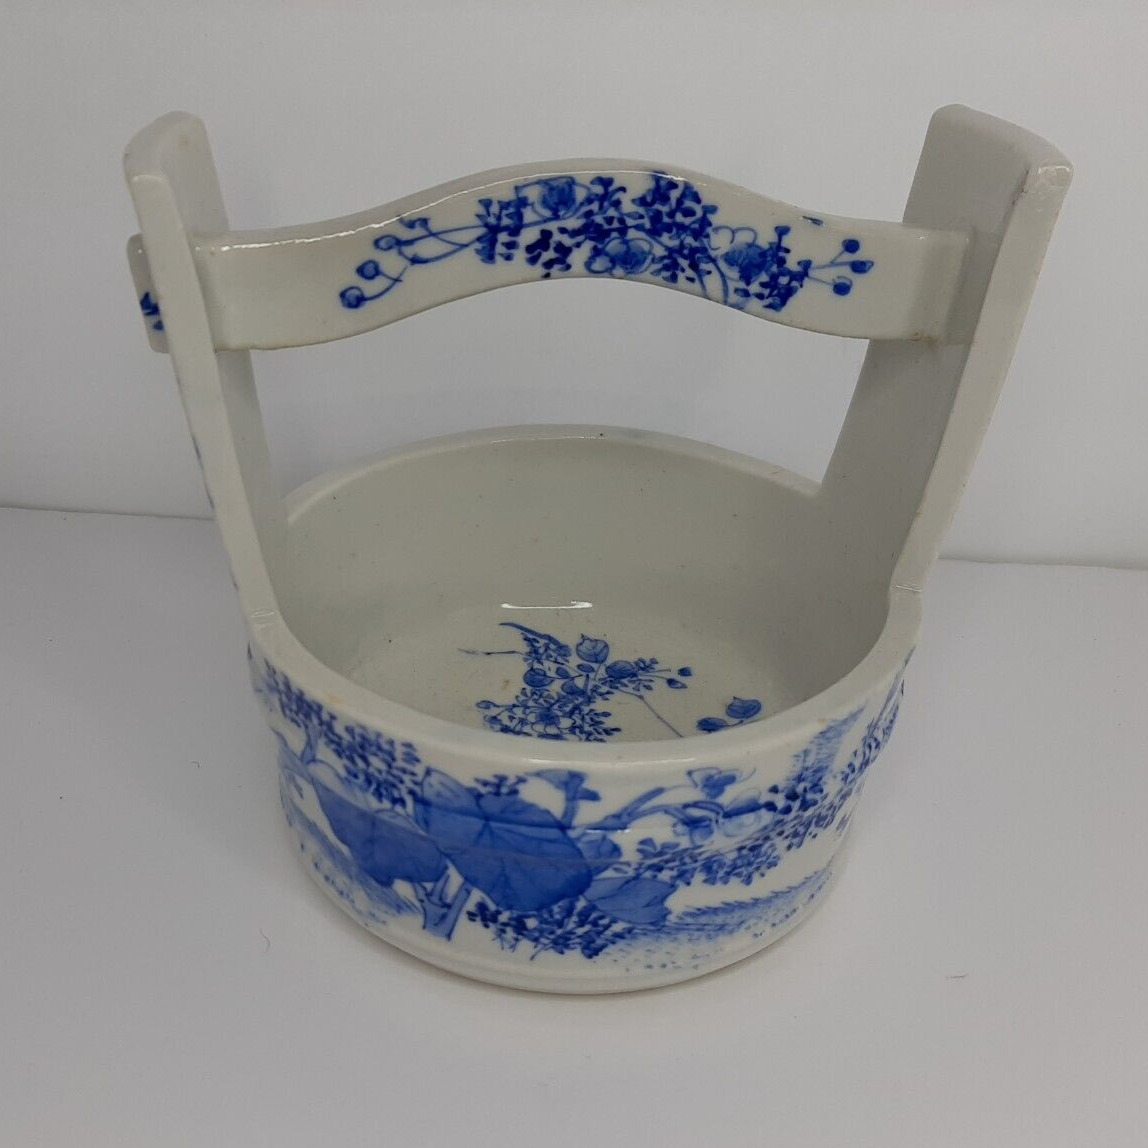 Antique Japanese water bucket planter vase blue white porcelain Meiji period?